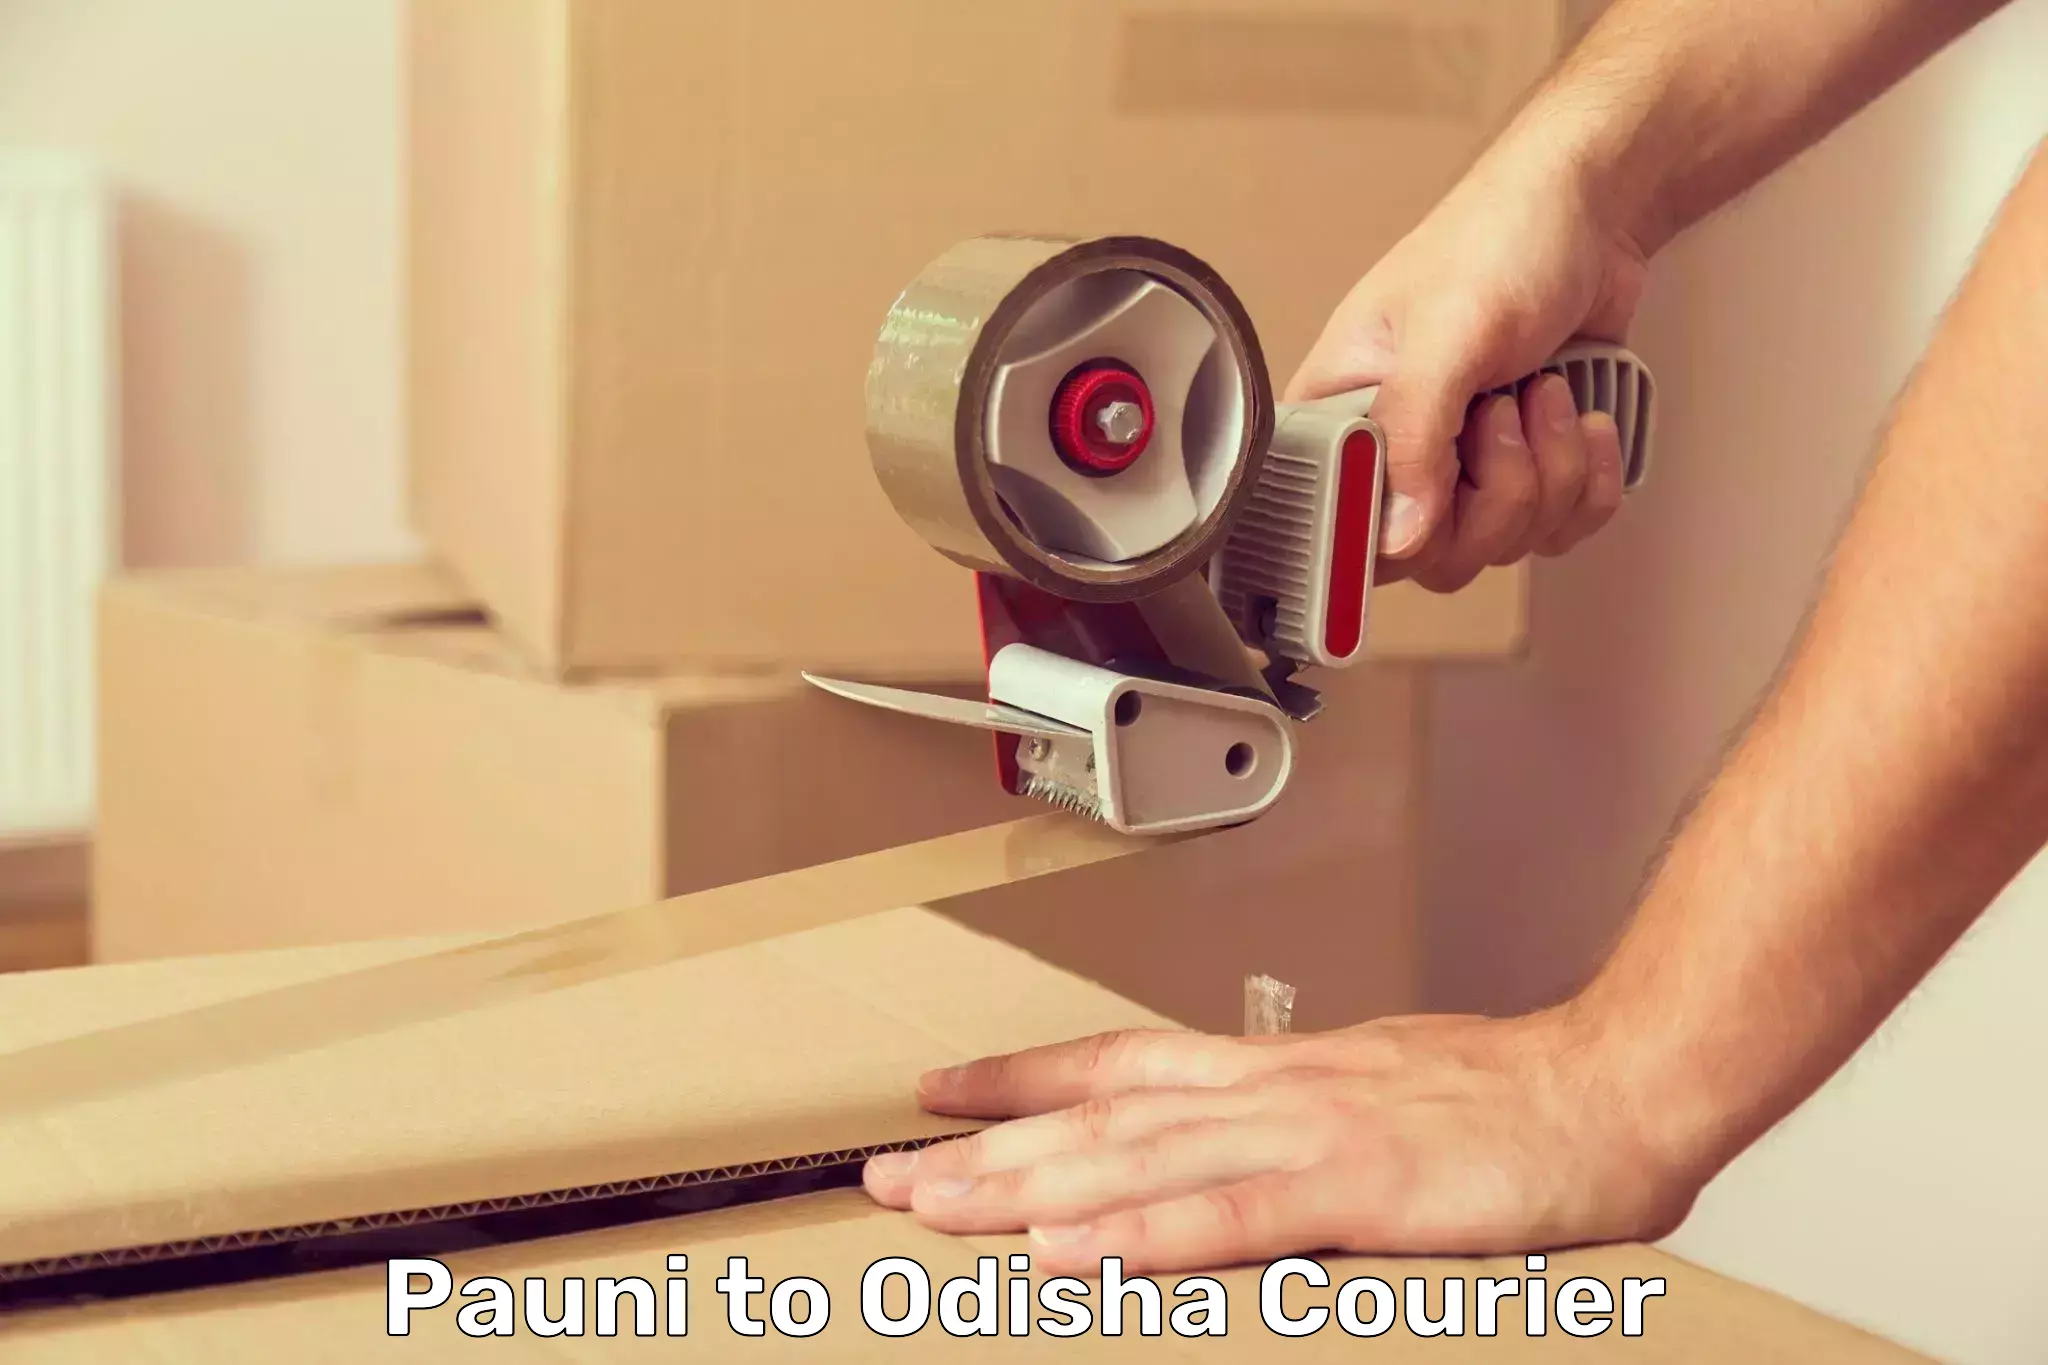 Customer-centric shipping Pauni to Dandisahi